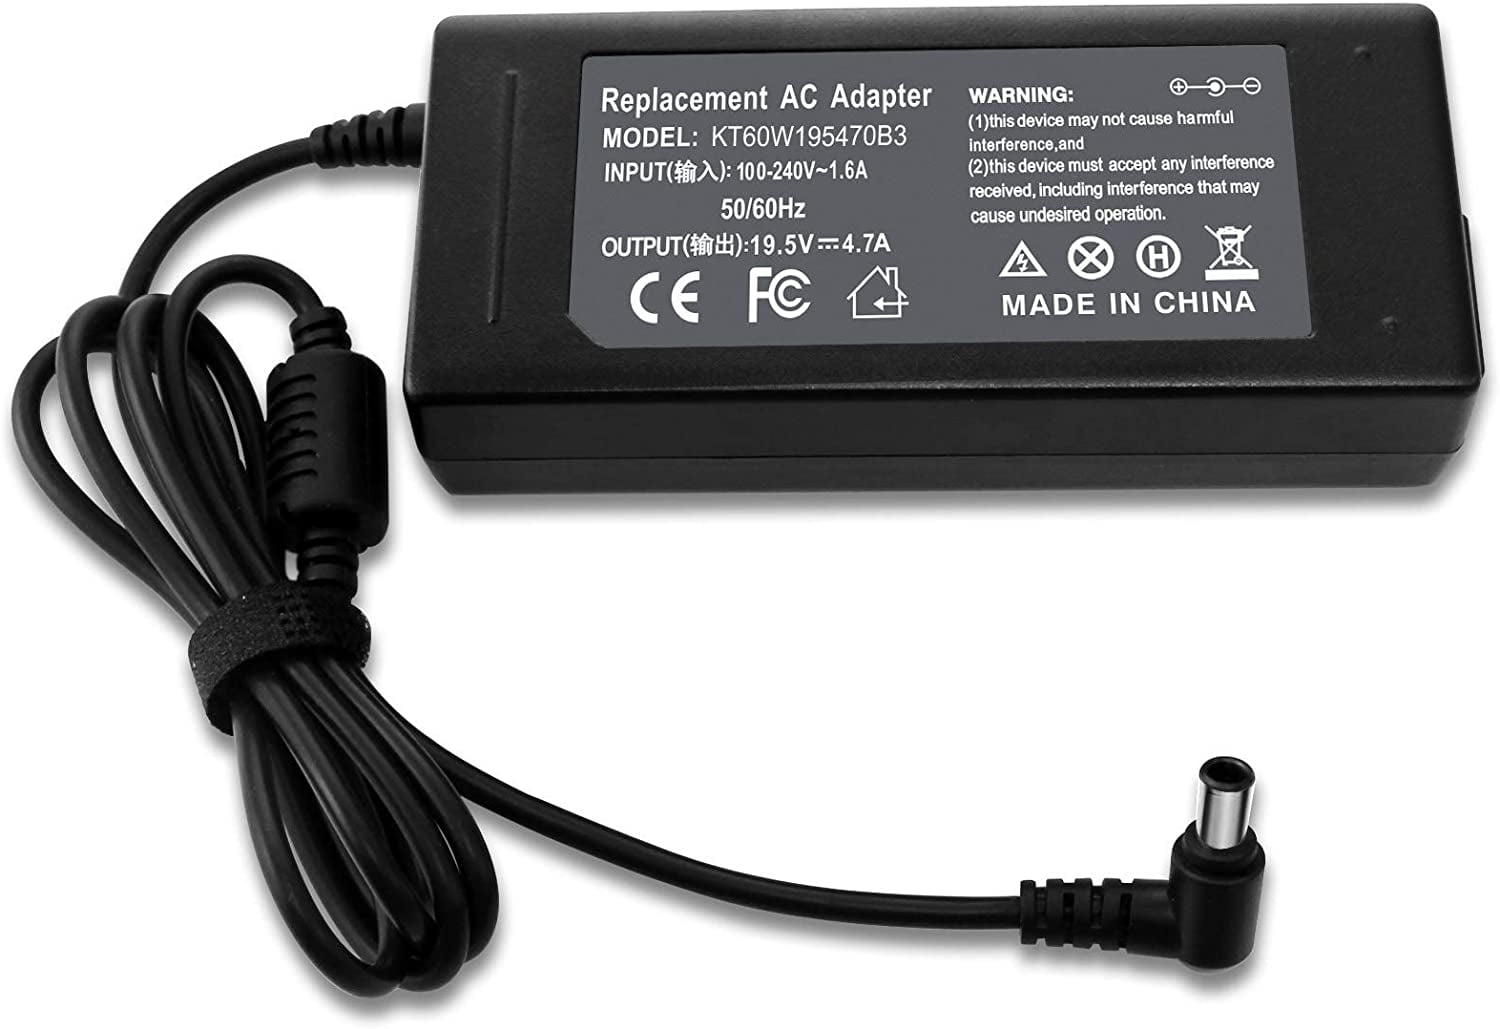 19.5V AC Adapter for Sony Bravia KDL-40 KDL-42 KDL-48 KDL-55 KDL-32 Series KDL-40R510C KDL-40W650D KDL48W590B KDL55W650D KDL48W600B KDL-42W650A KDL-40W600B KDL-32W700B Smart LED LCD HD TV Screen Power -